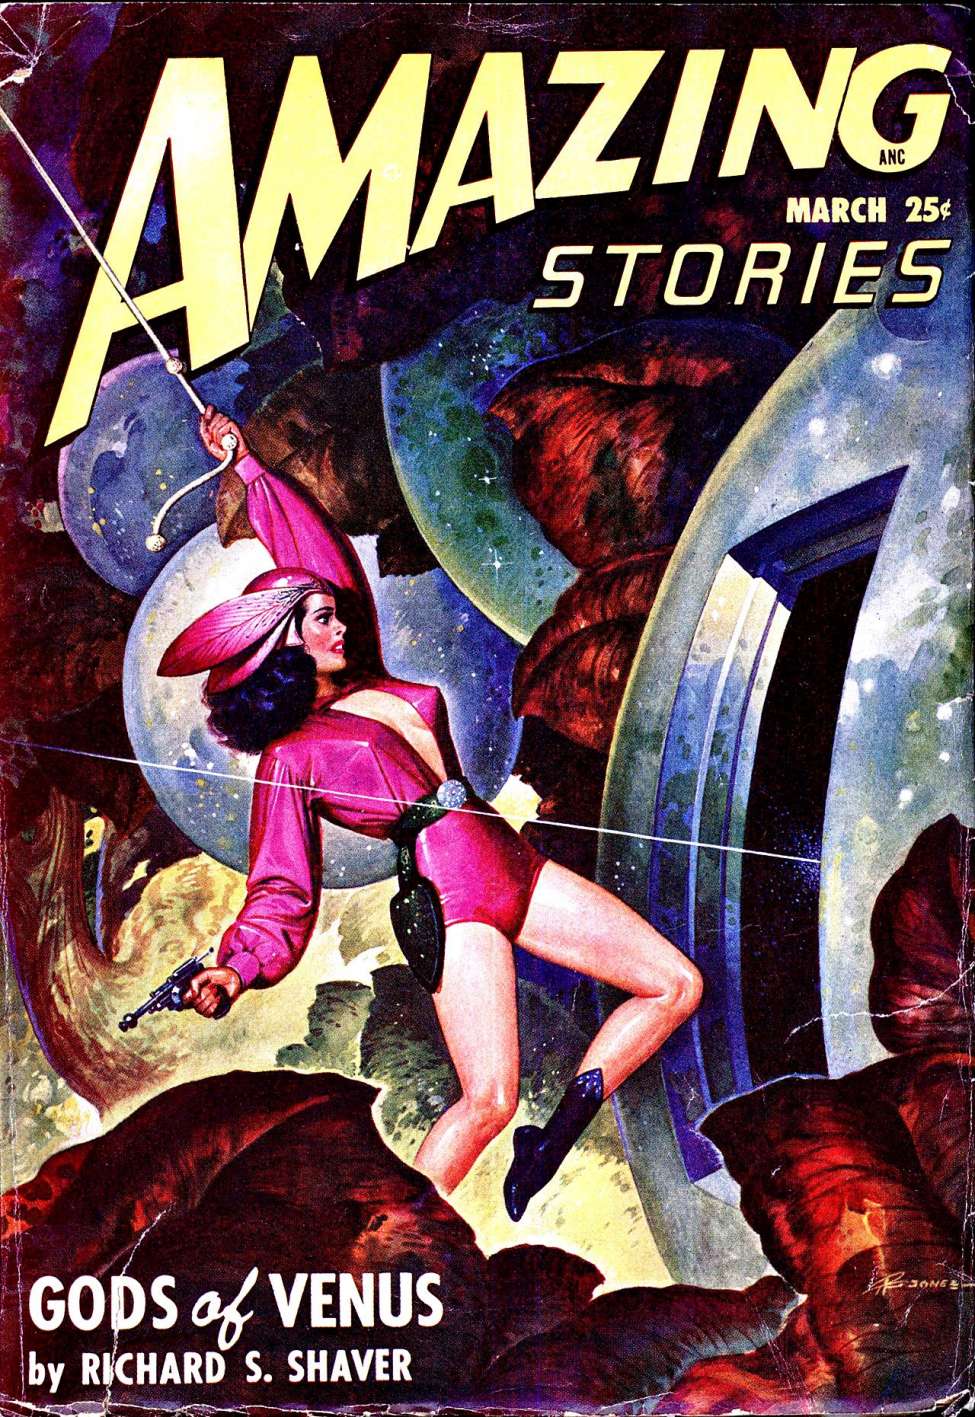 Comic Book Cover For Amazing Stories v22 3 - Gods of Venus - Richard S. Shaver